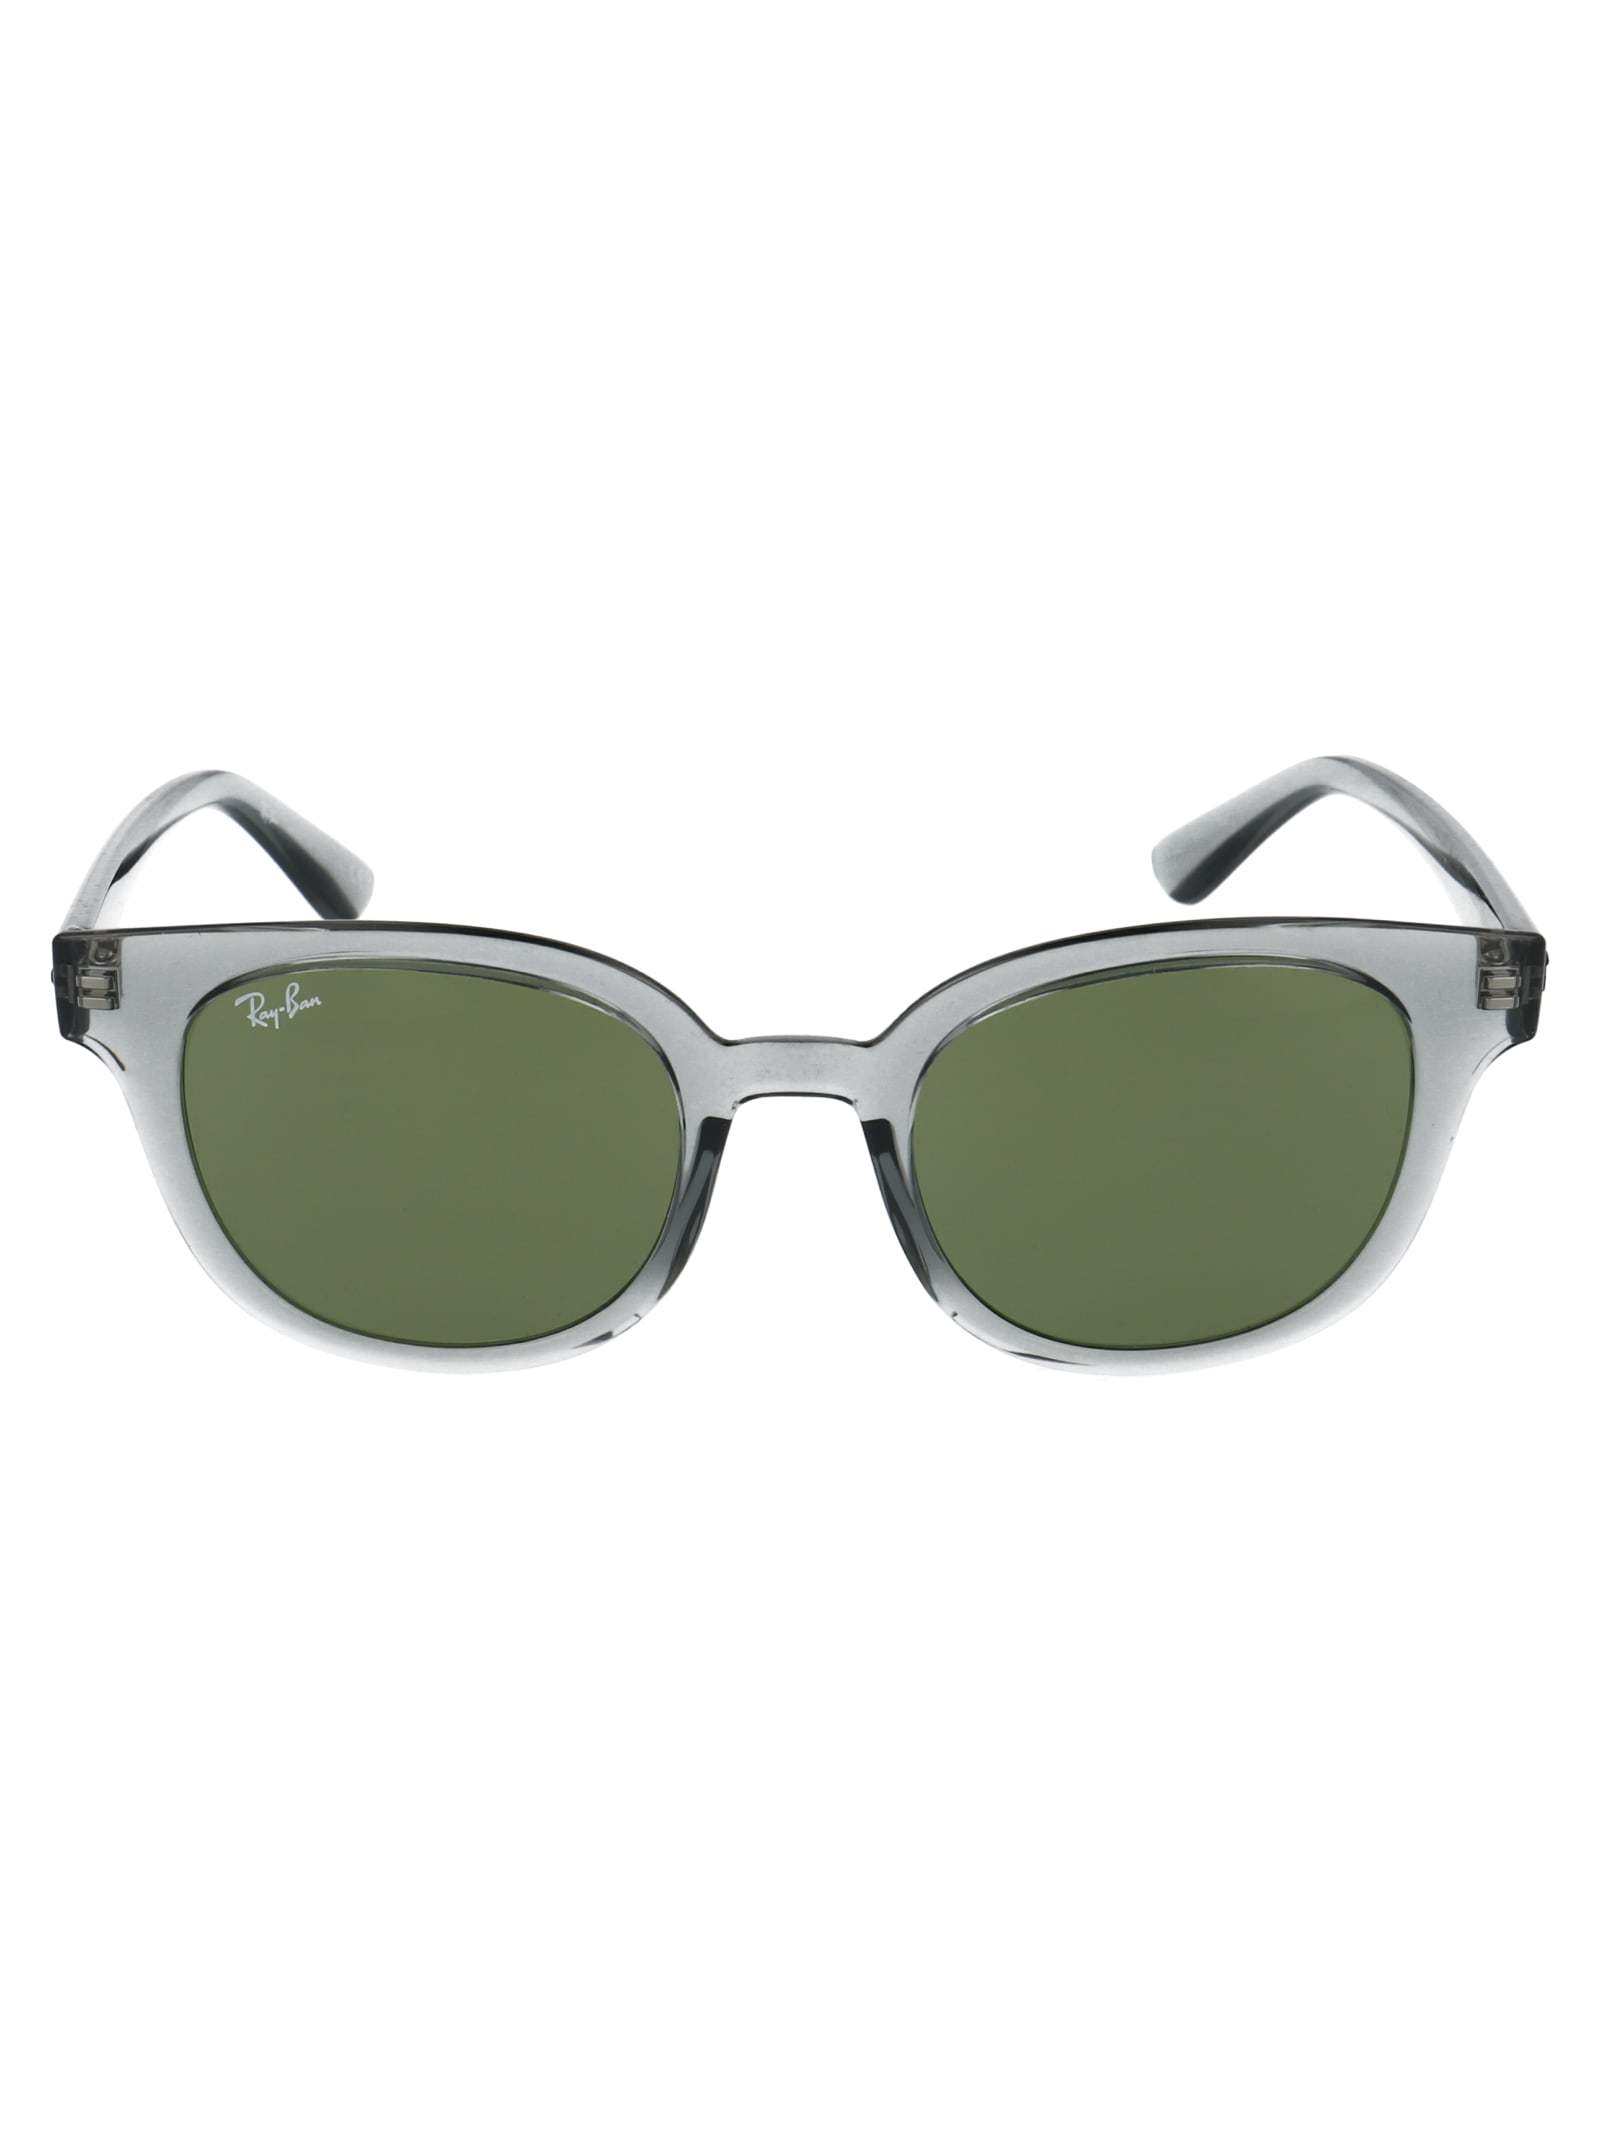 Ray Ban Sunglasses In E Trasparent Grey